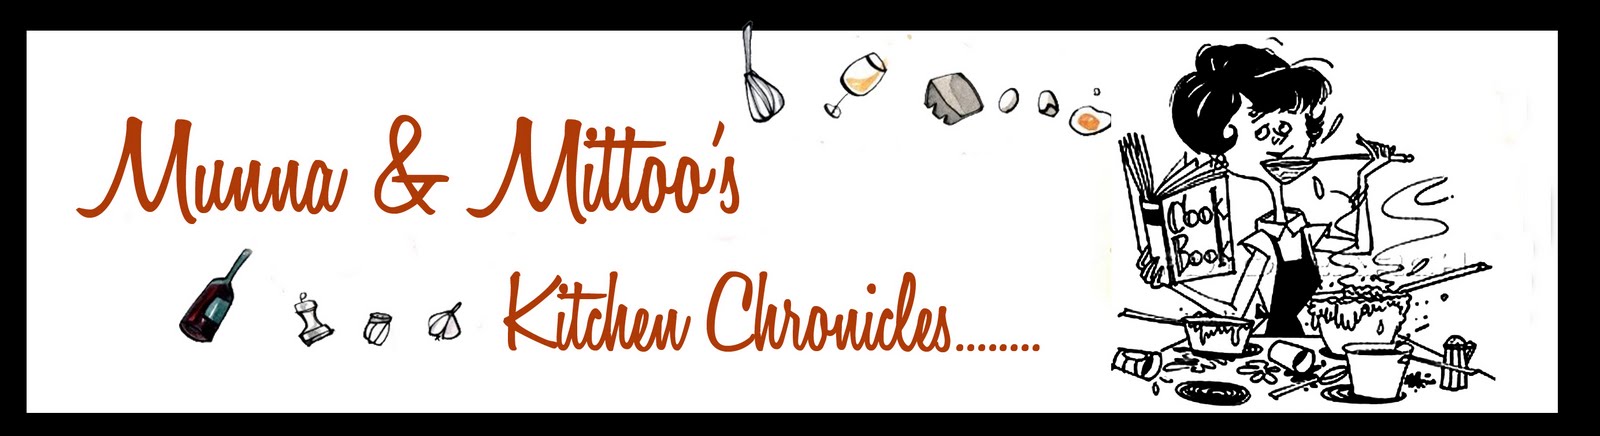 Munna & Mittoo's Kitchen Chronicles..